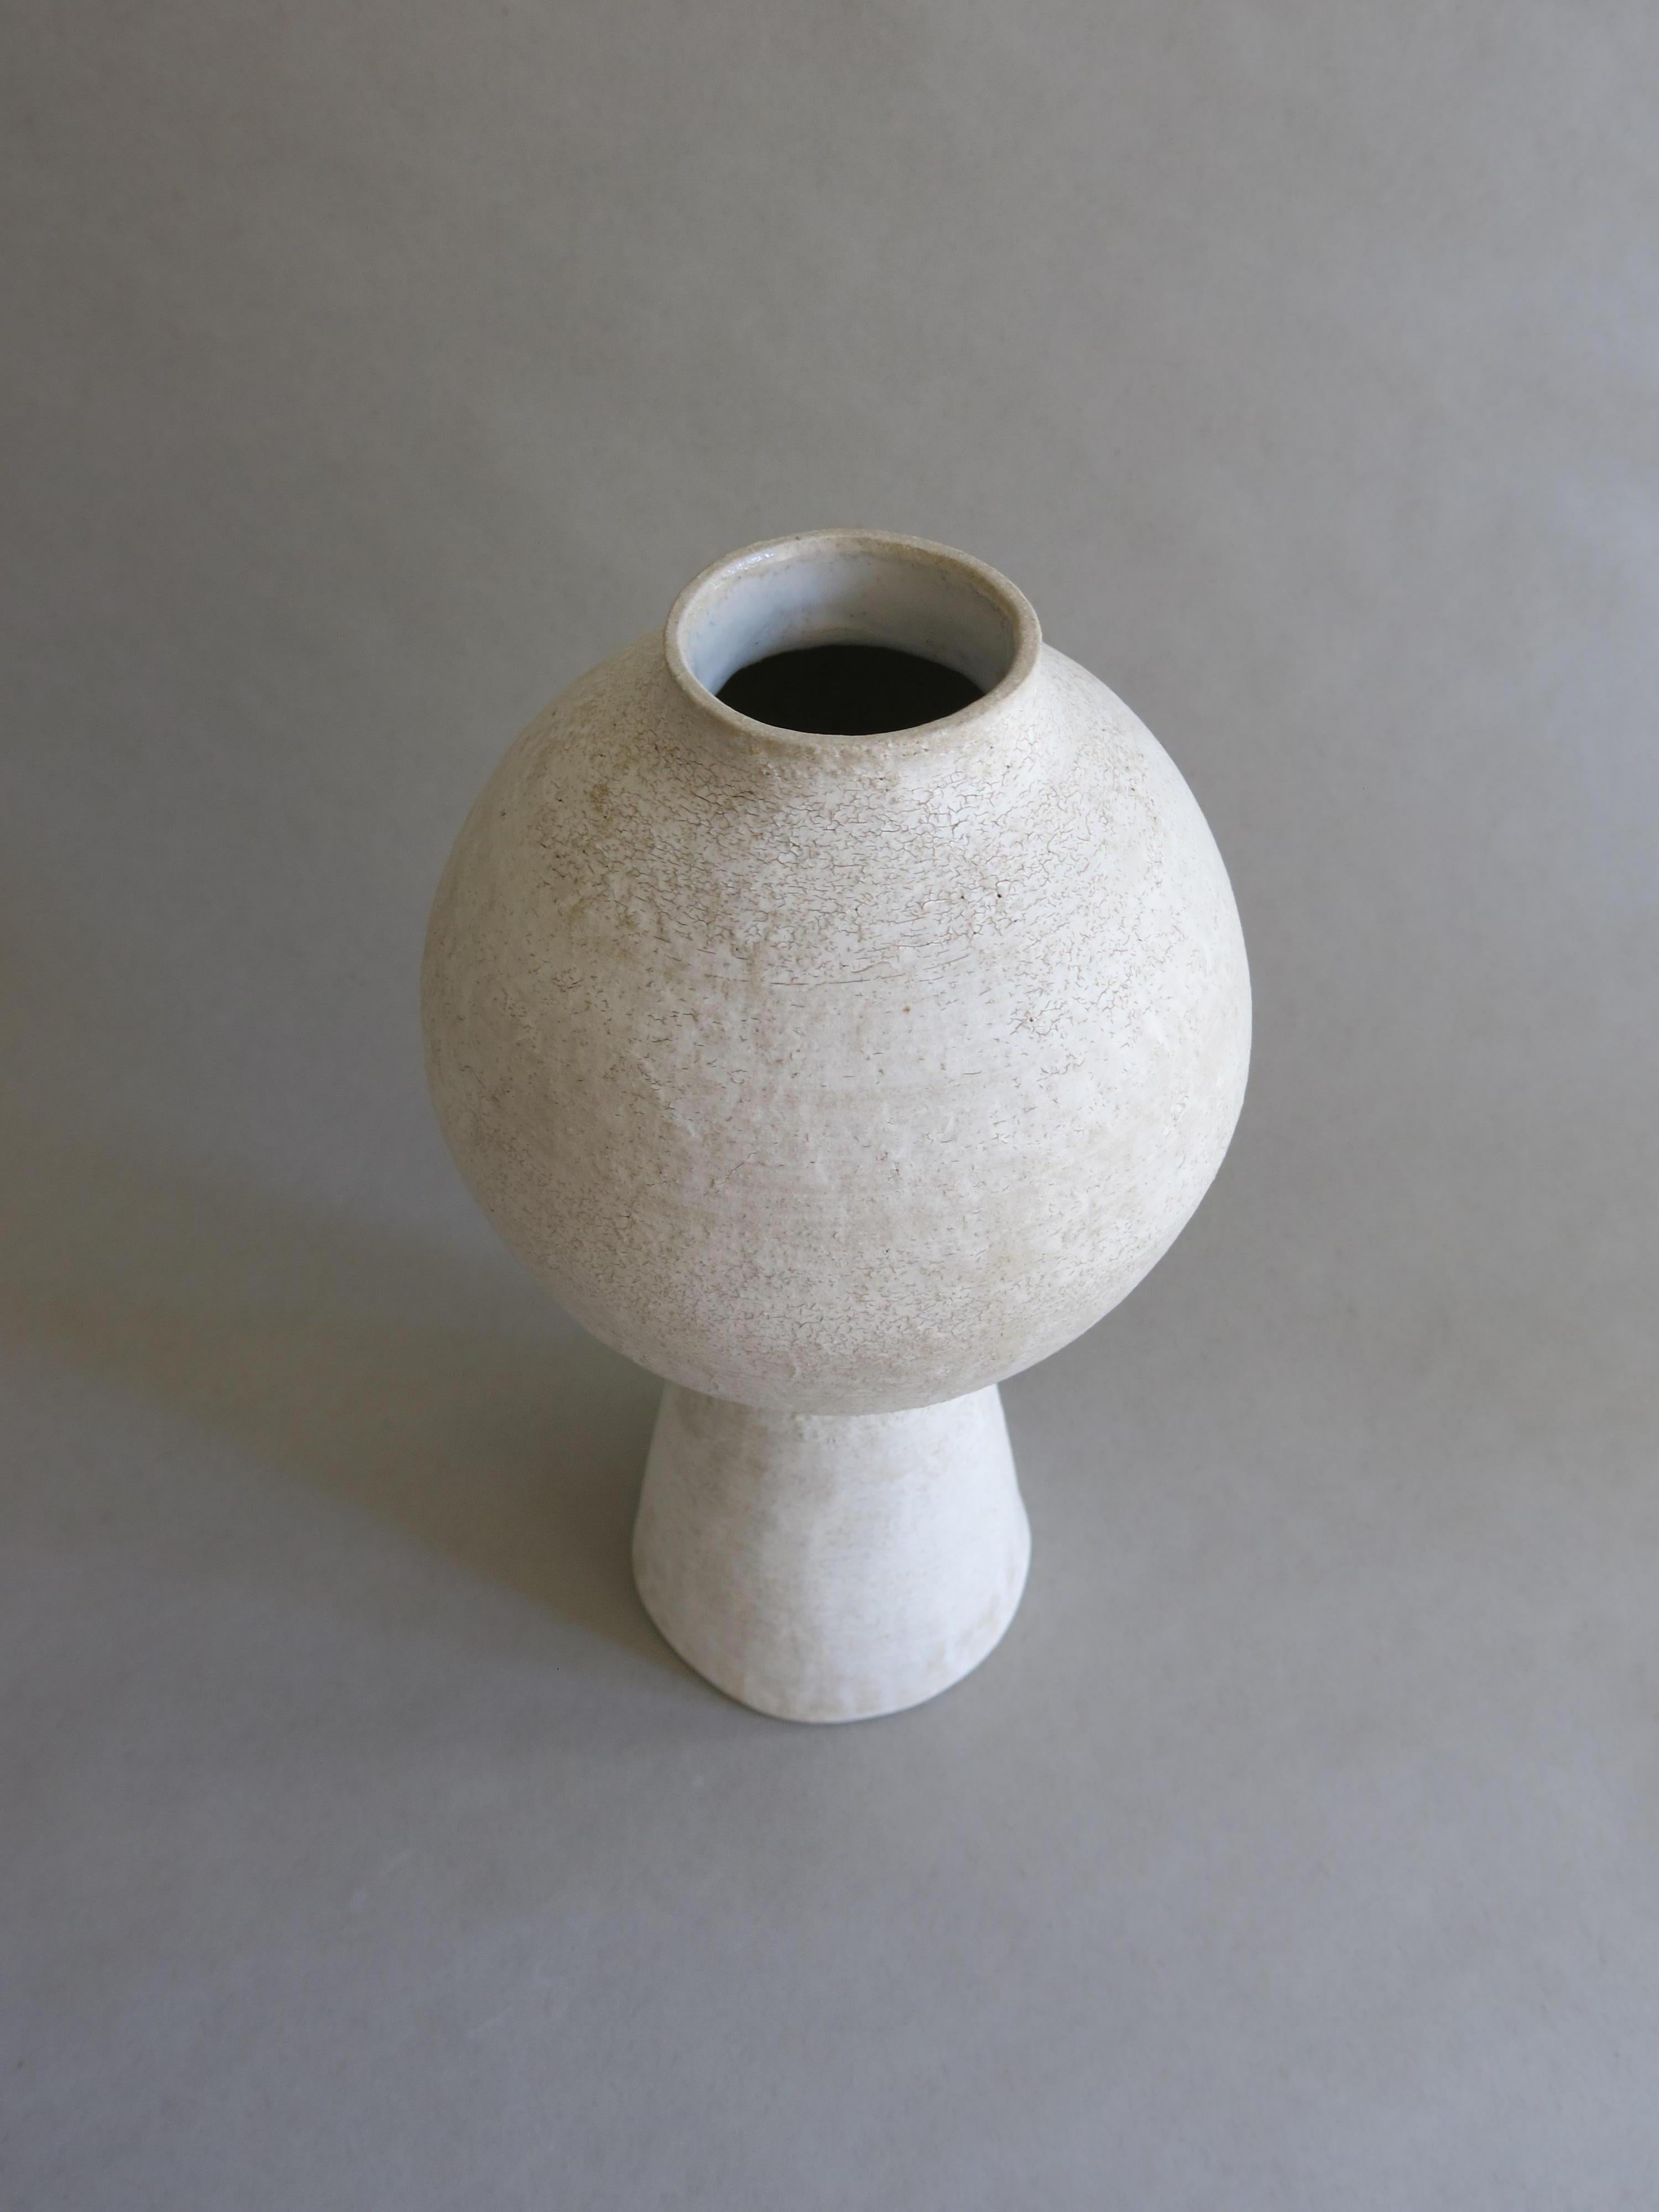 Ensemble of Four Ceramic Vases by John Born 1